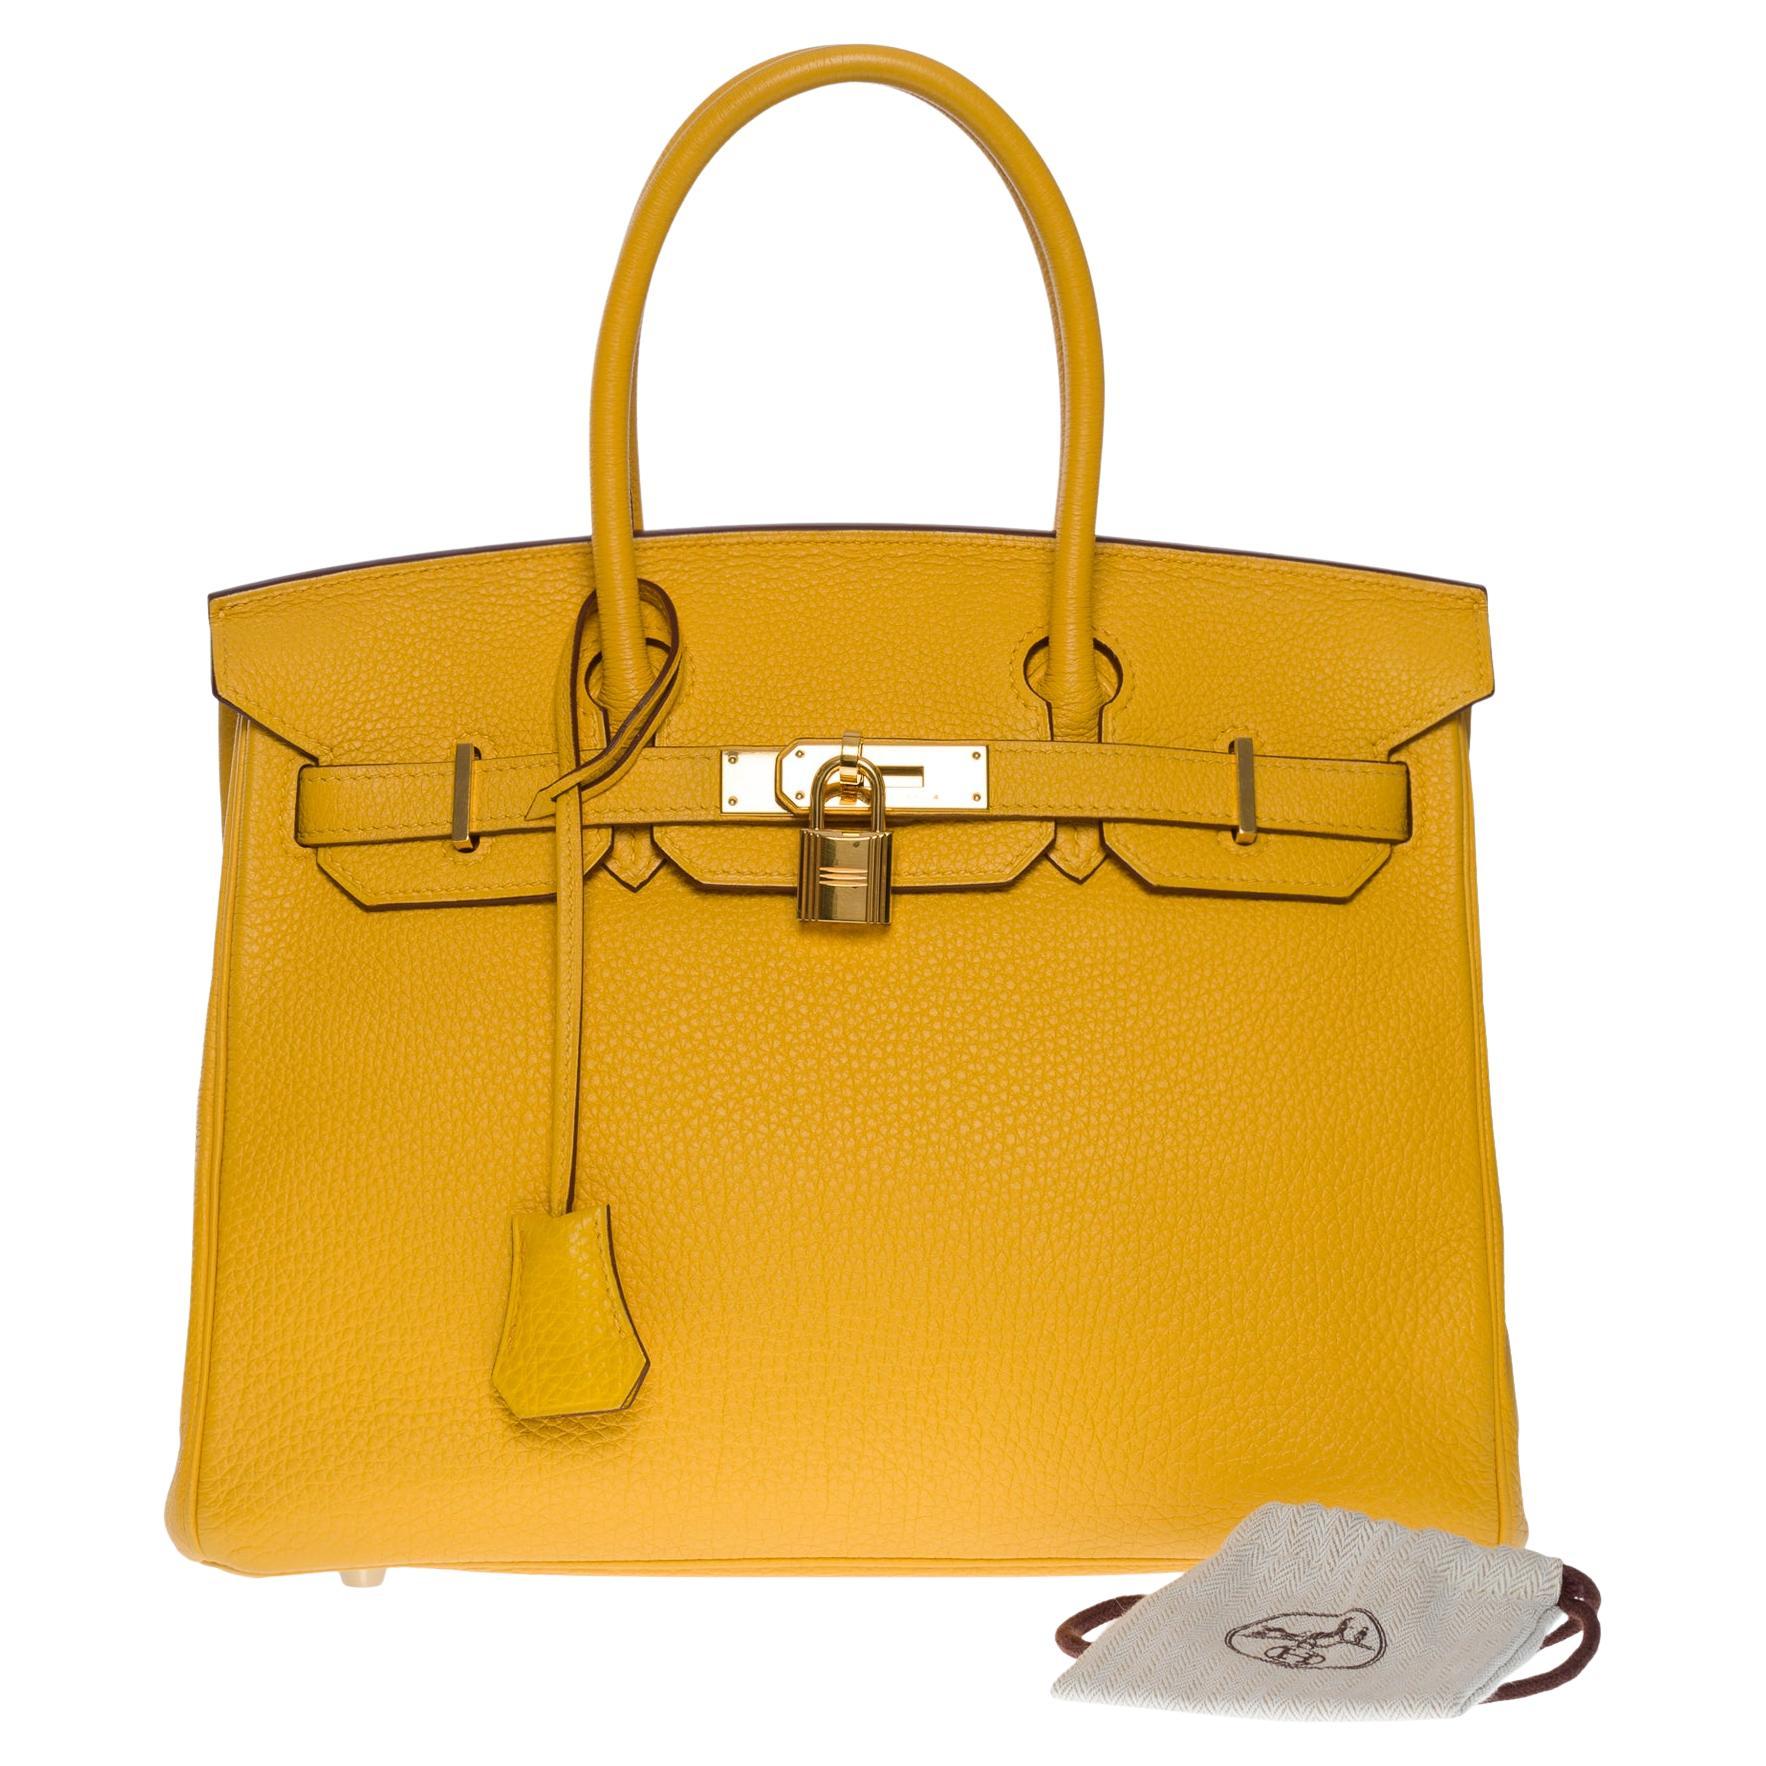 Amazing & Bright Hermès Birkin 30 handbag in Yellow Togo leather, GHW